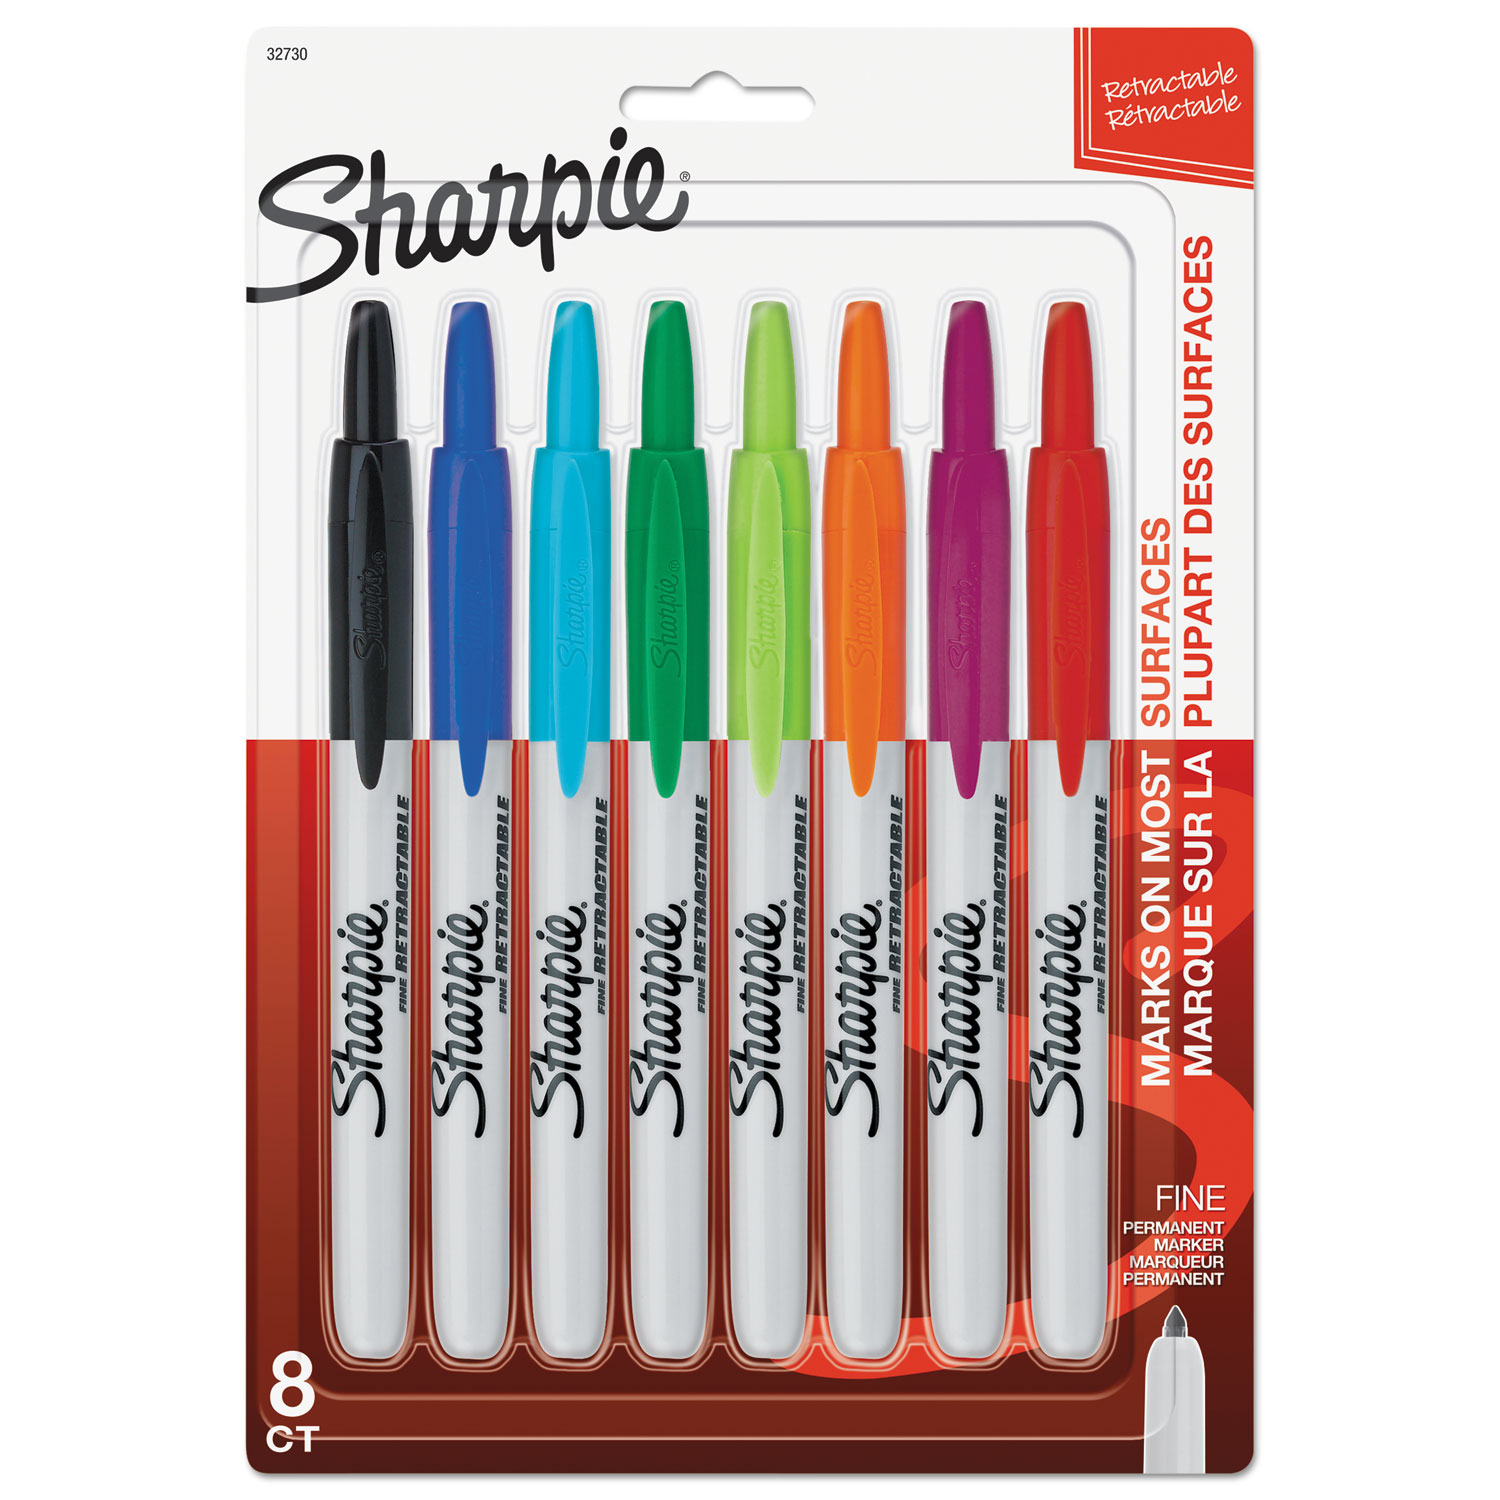 Sharpie Retractable Permanent Markers, Fine Point, Assorted Colors, 12-Count, 2 Sets